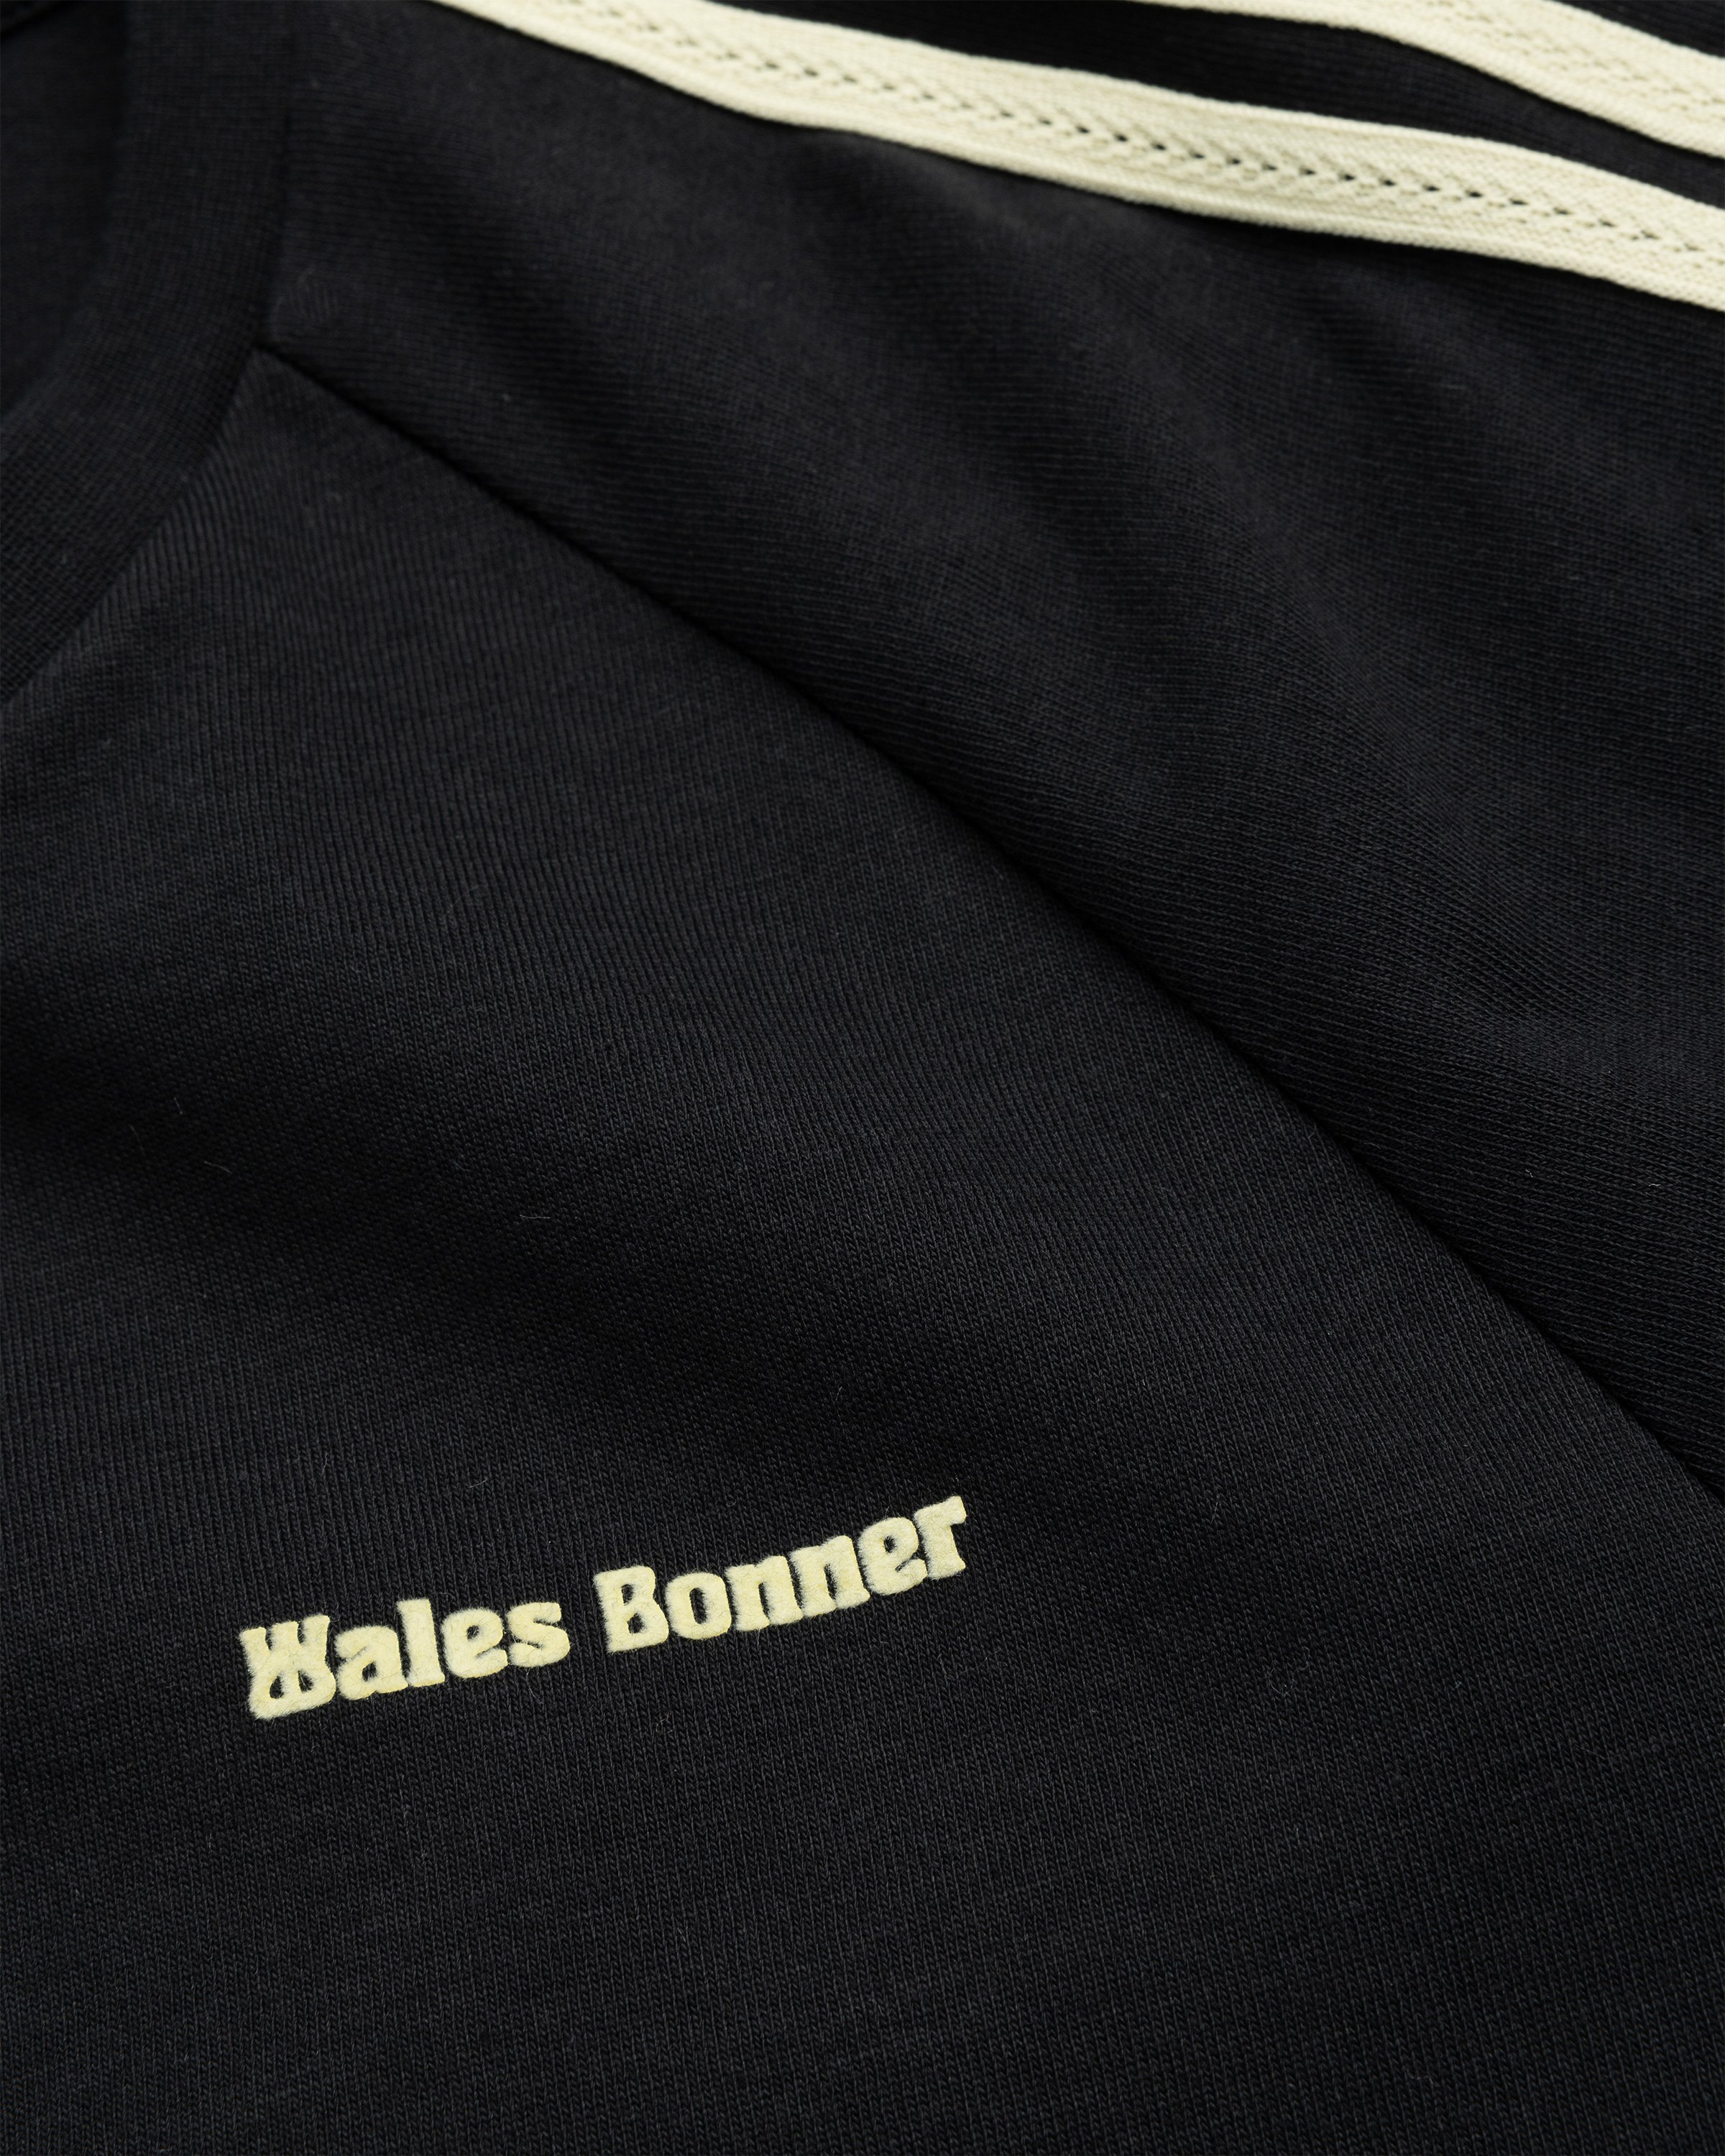 Adidas x Wales Bonner - WB S/S TEE BLACK - Clothing - Black - Image 6